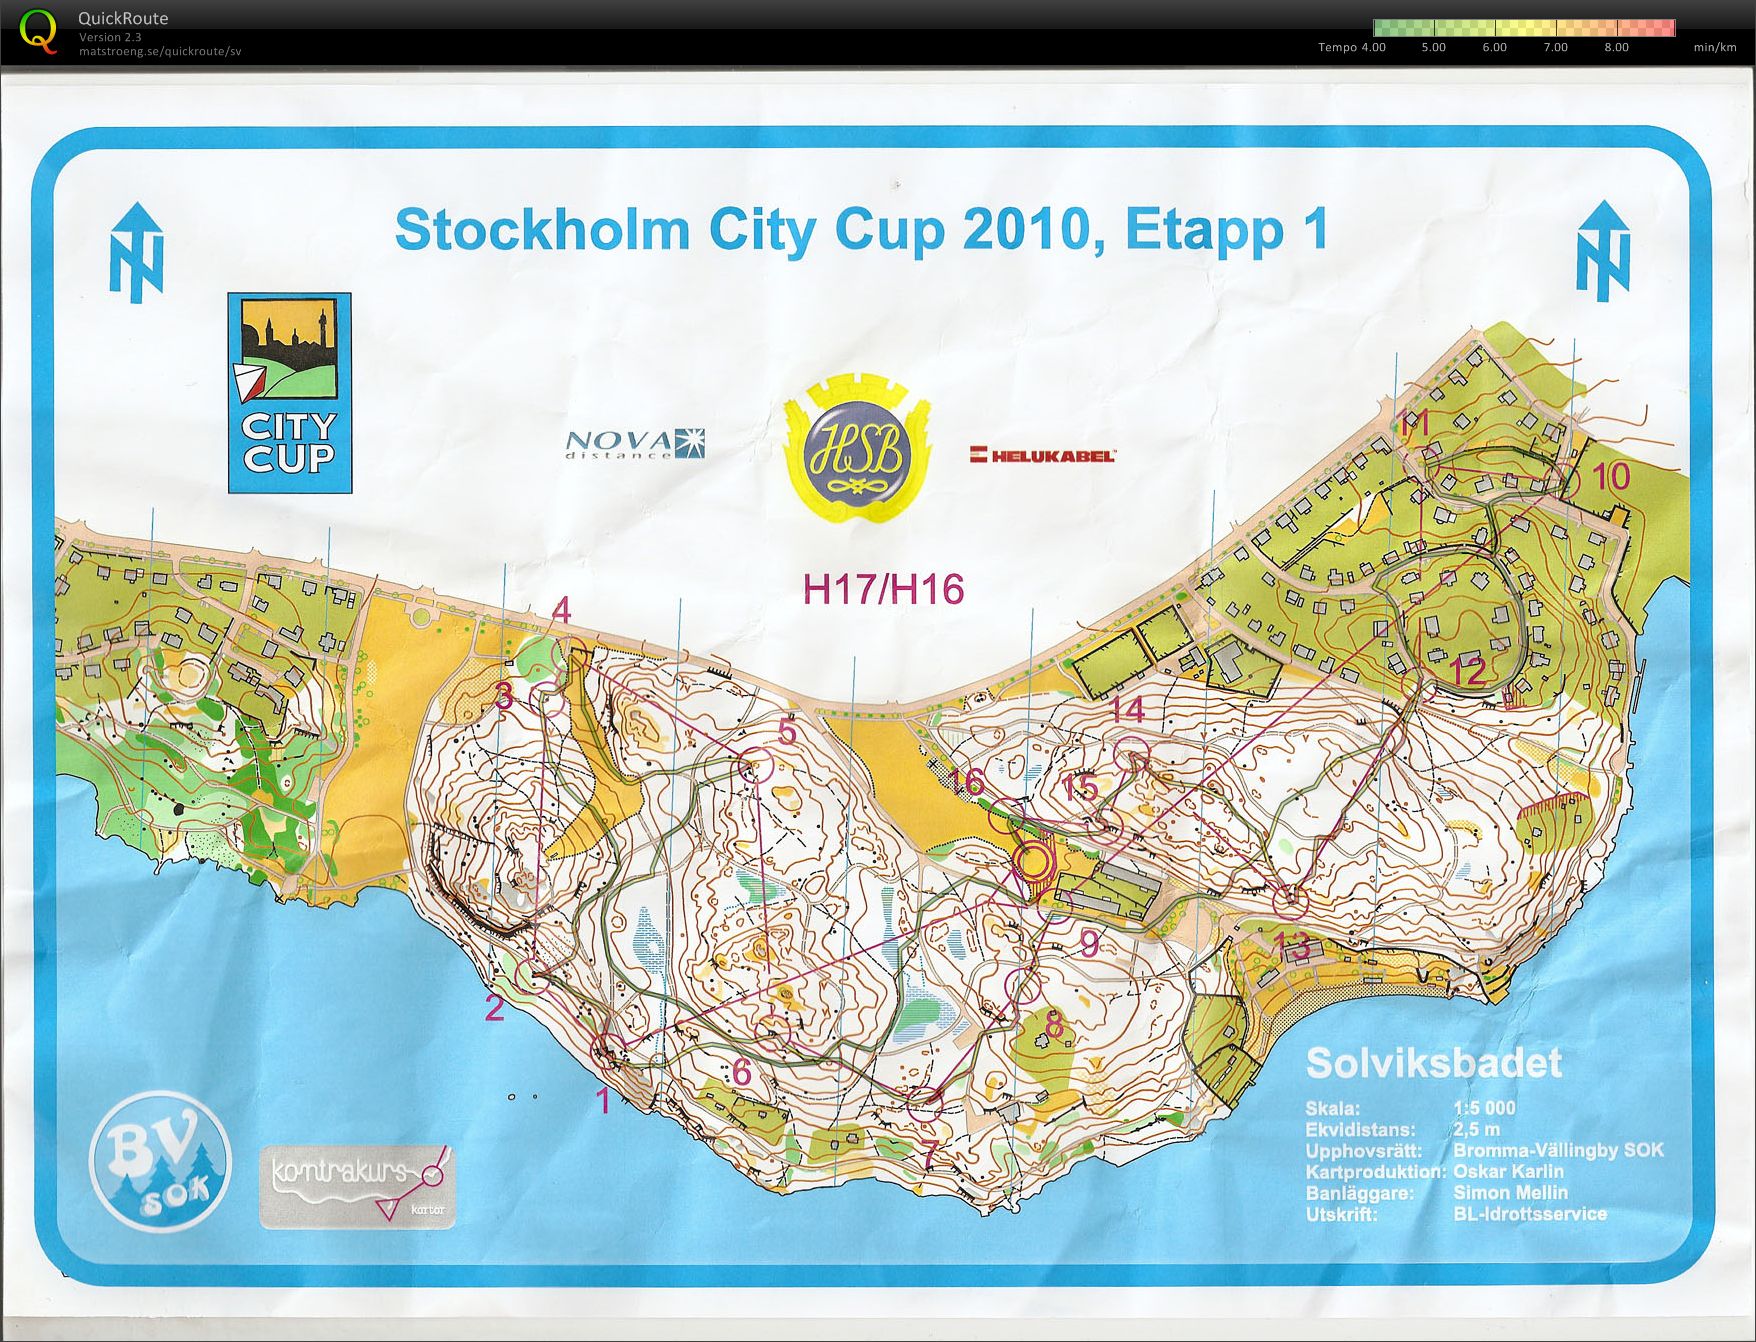 Stockholm City Cup, etapp 1 (19/05/2010)